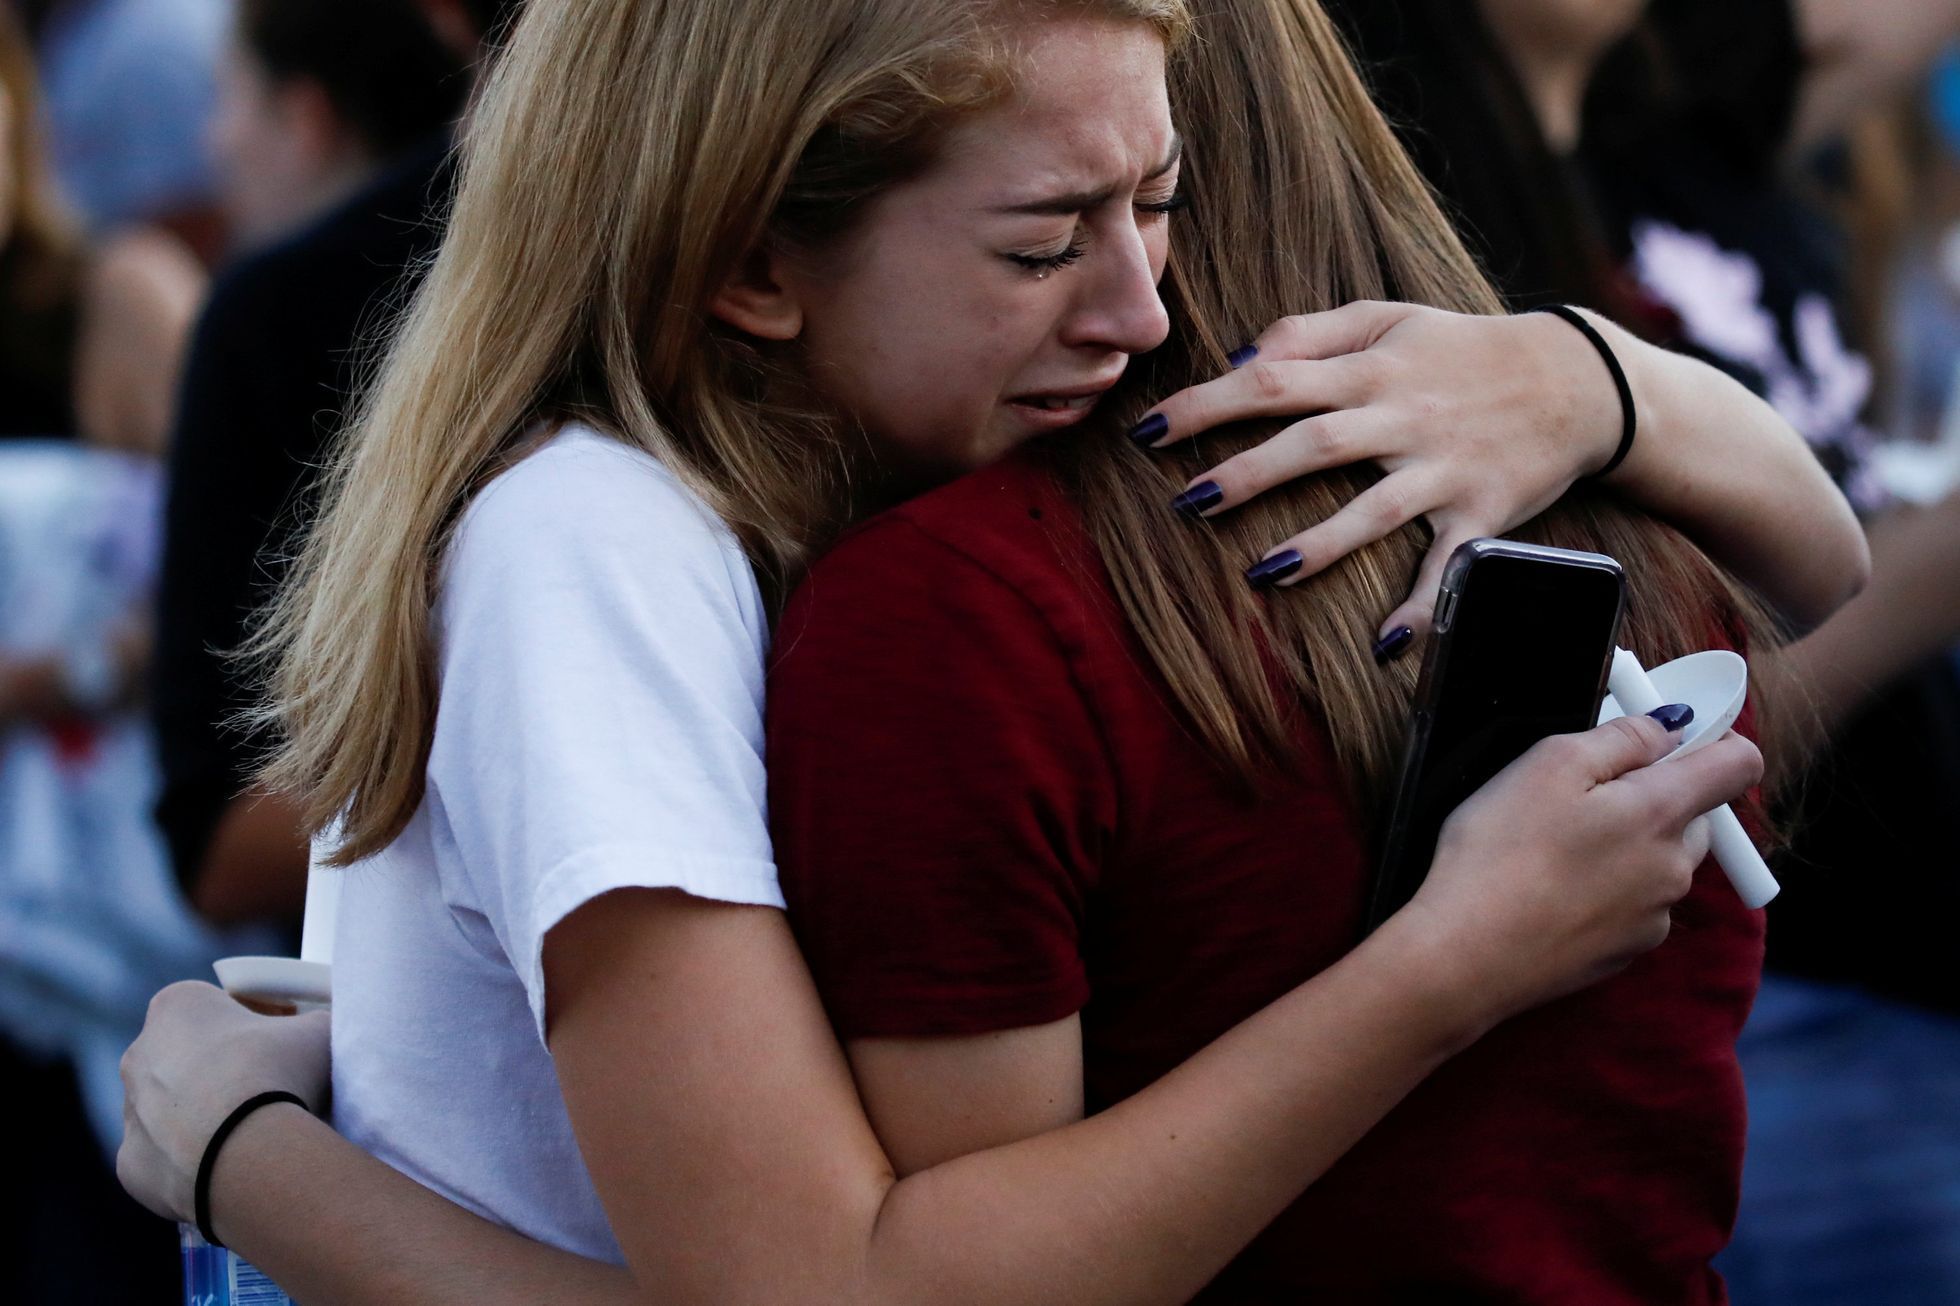 Parkland Florida střelba škola pieta studenti NEPOUŽÍVAT